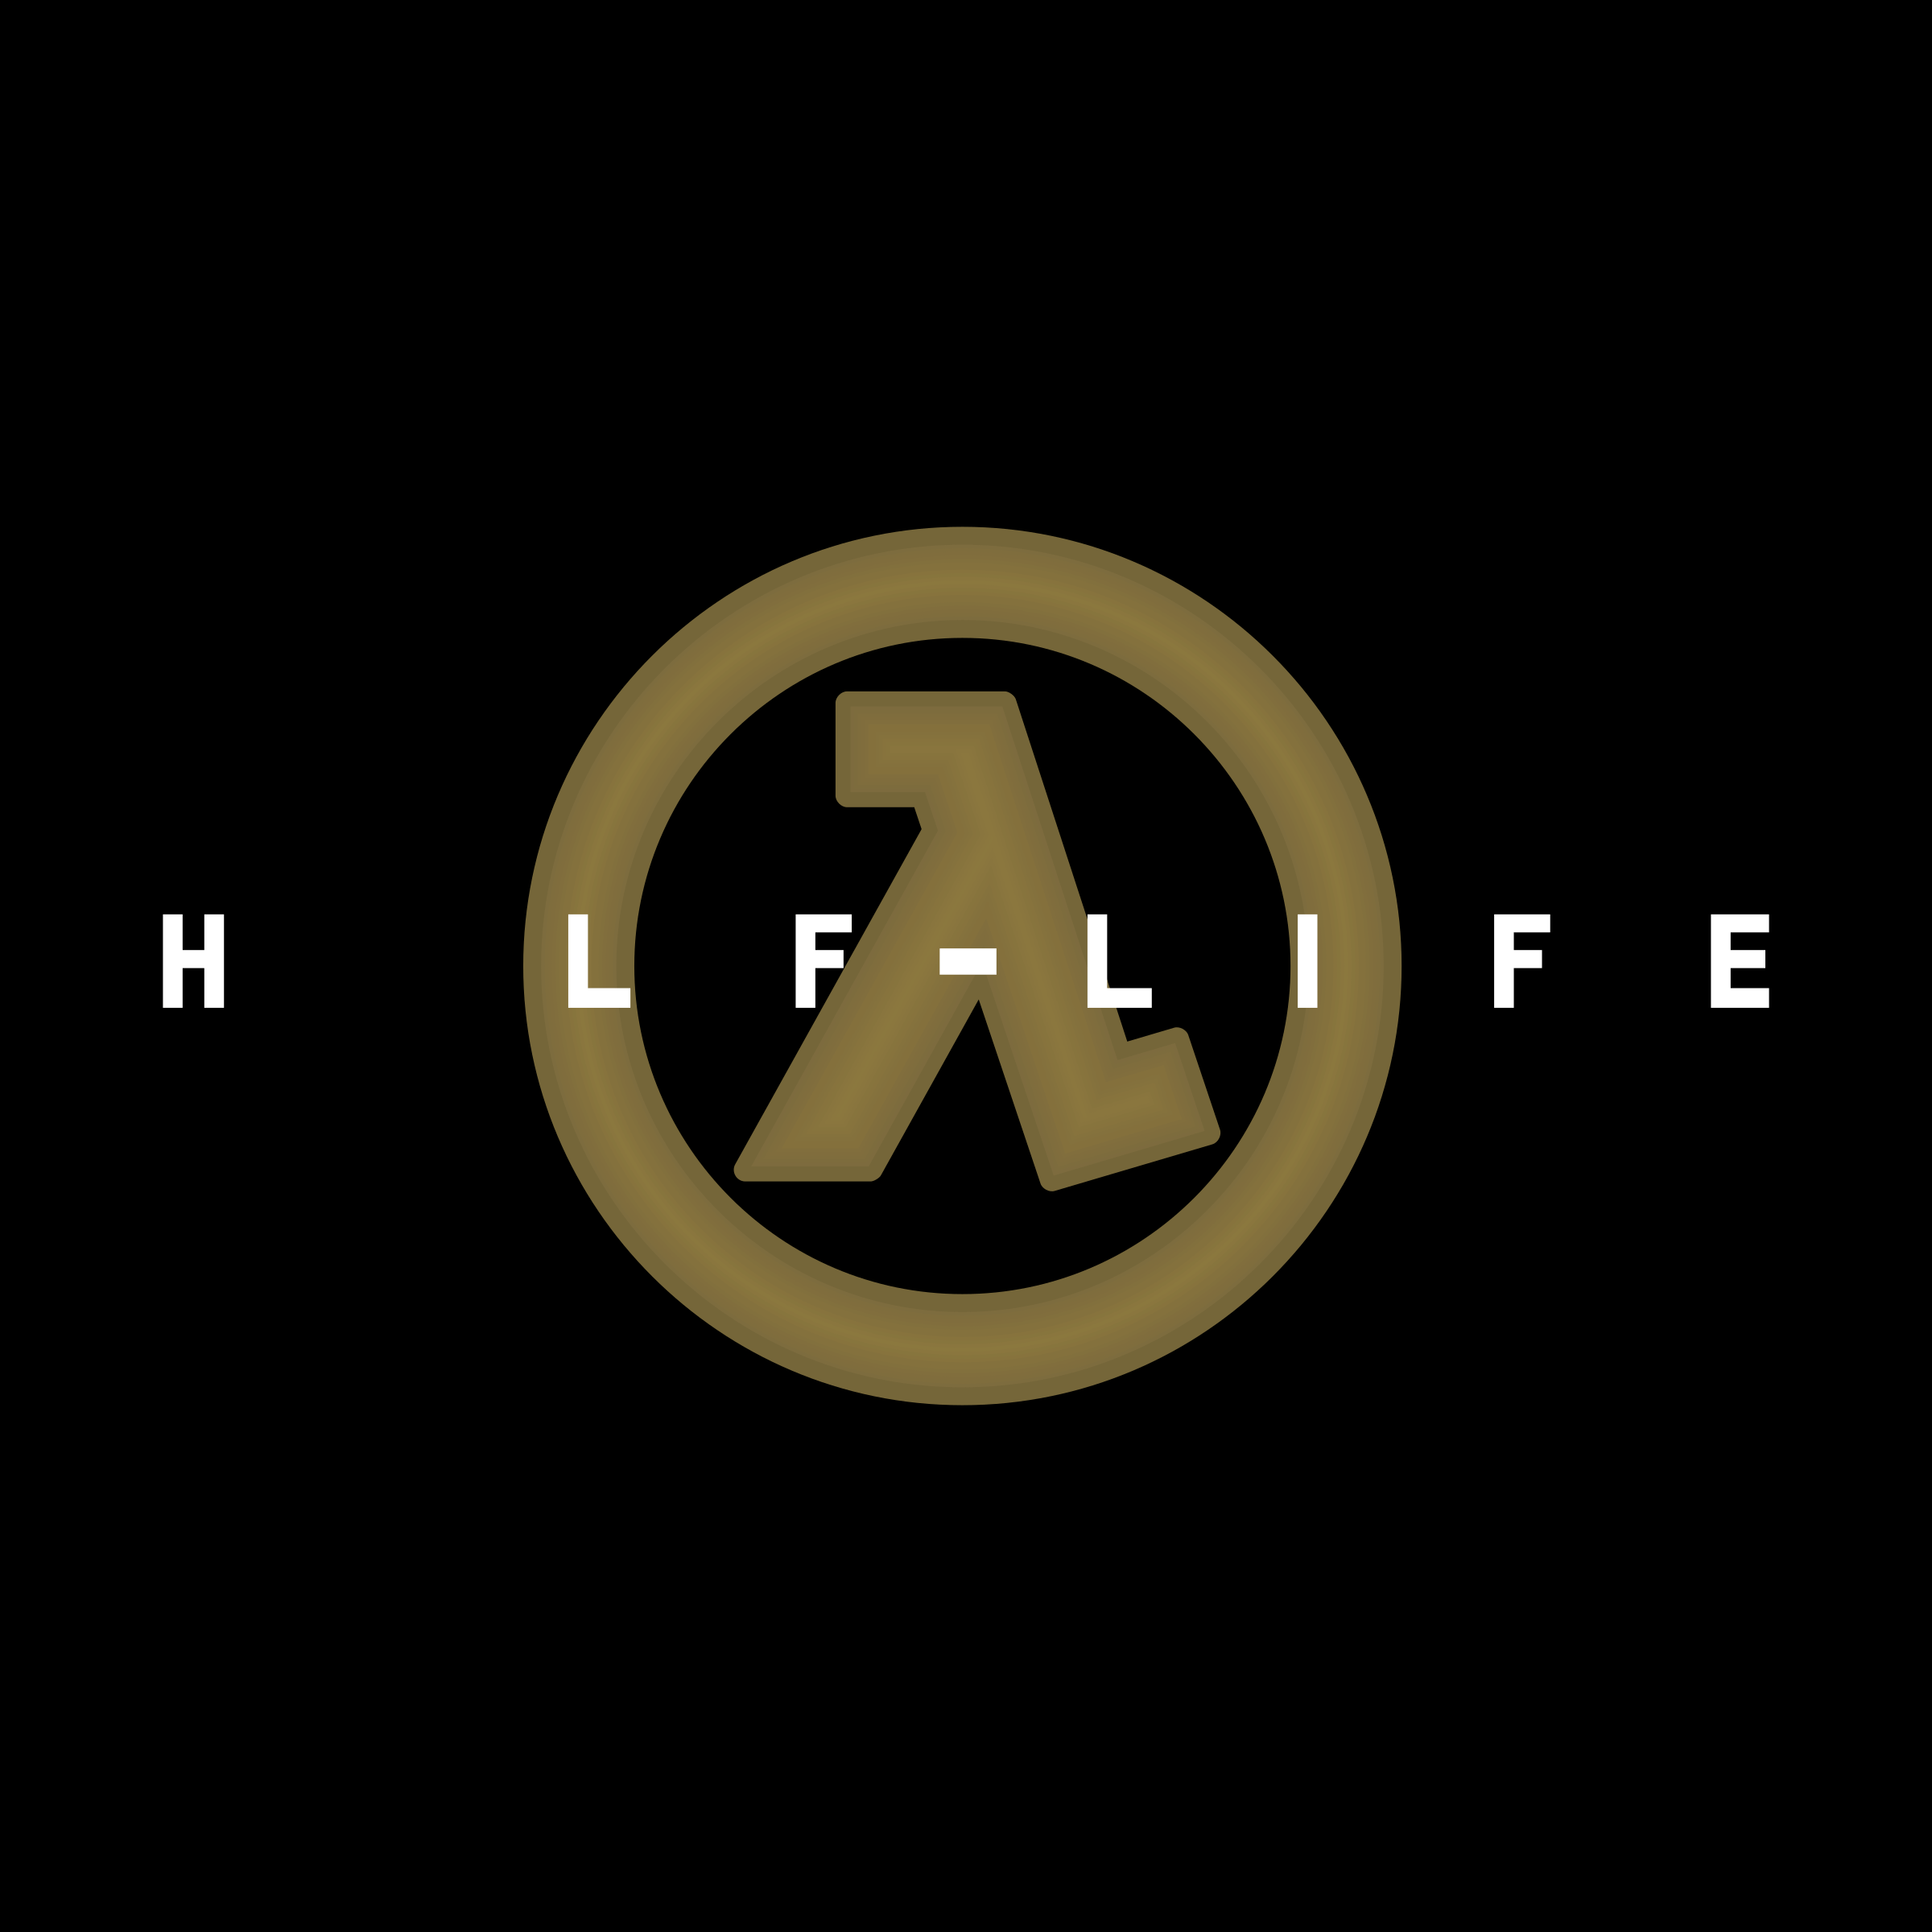 Half-Life Logo - Half Life Logo PNG Transparent & SVG Vector - Freebie Supply